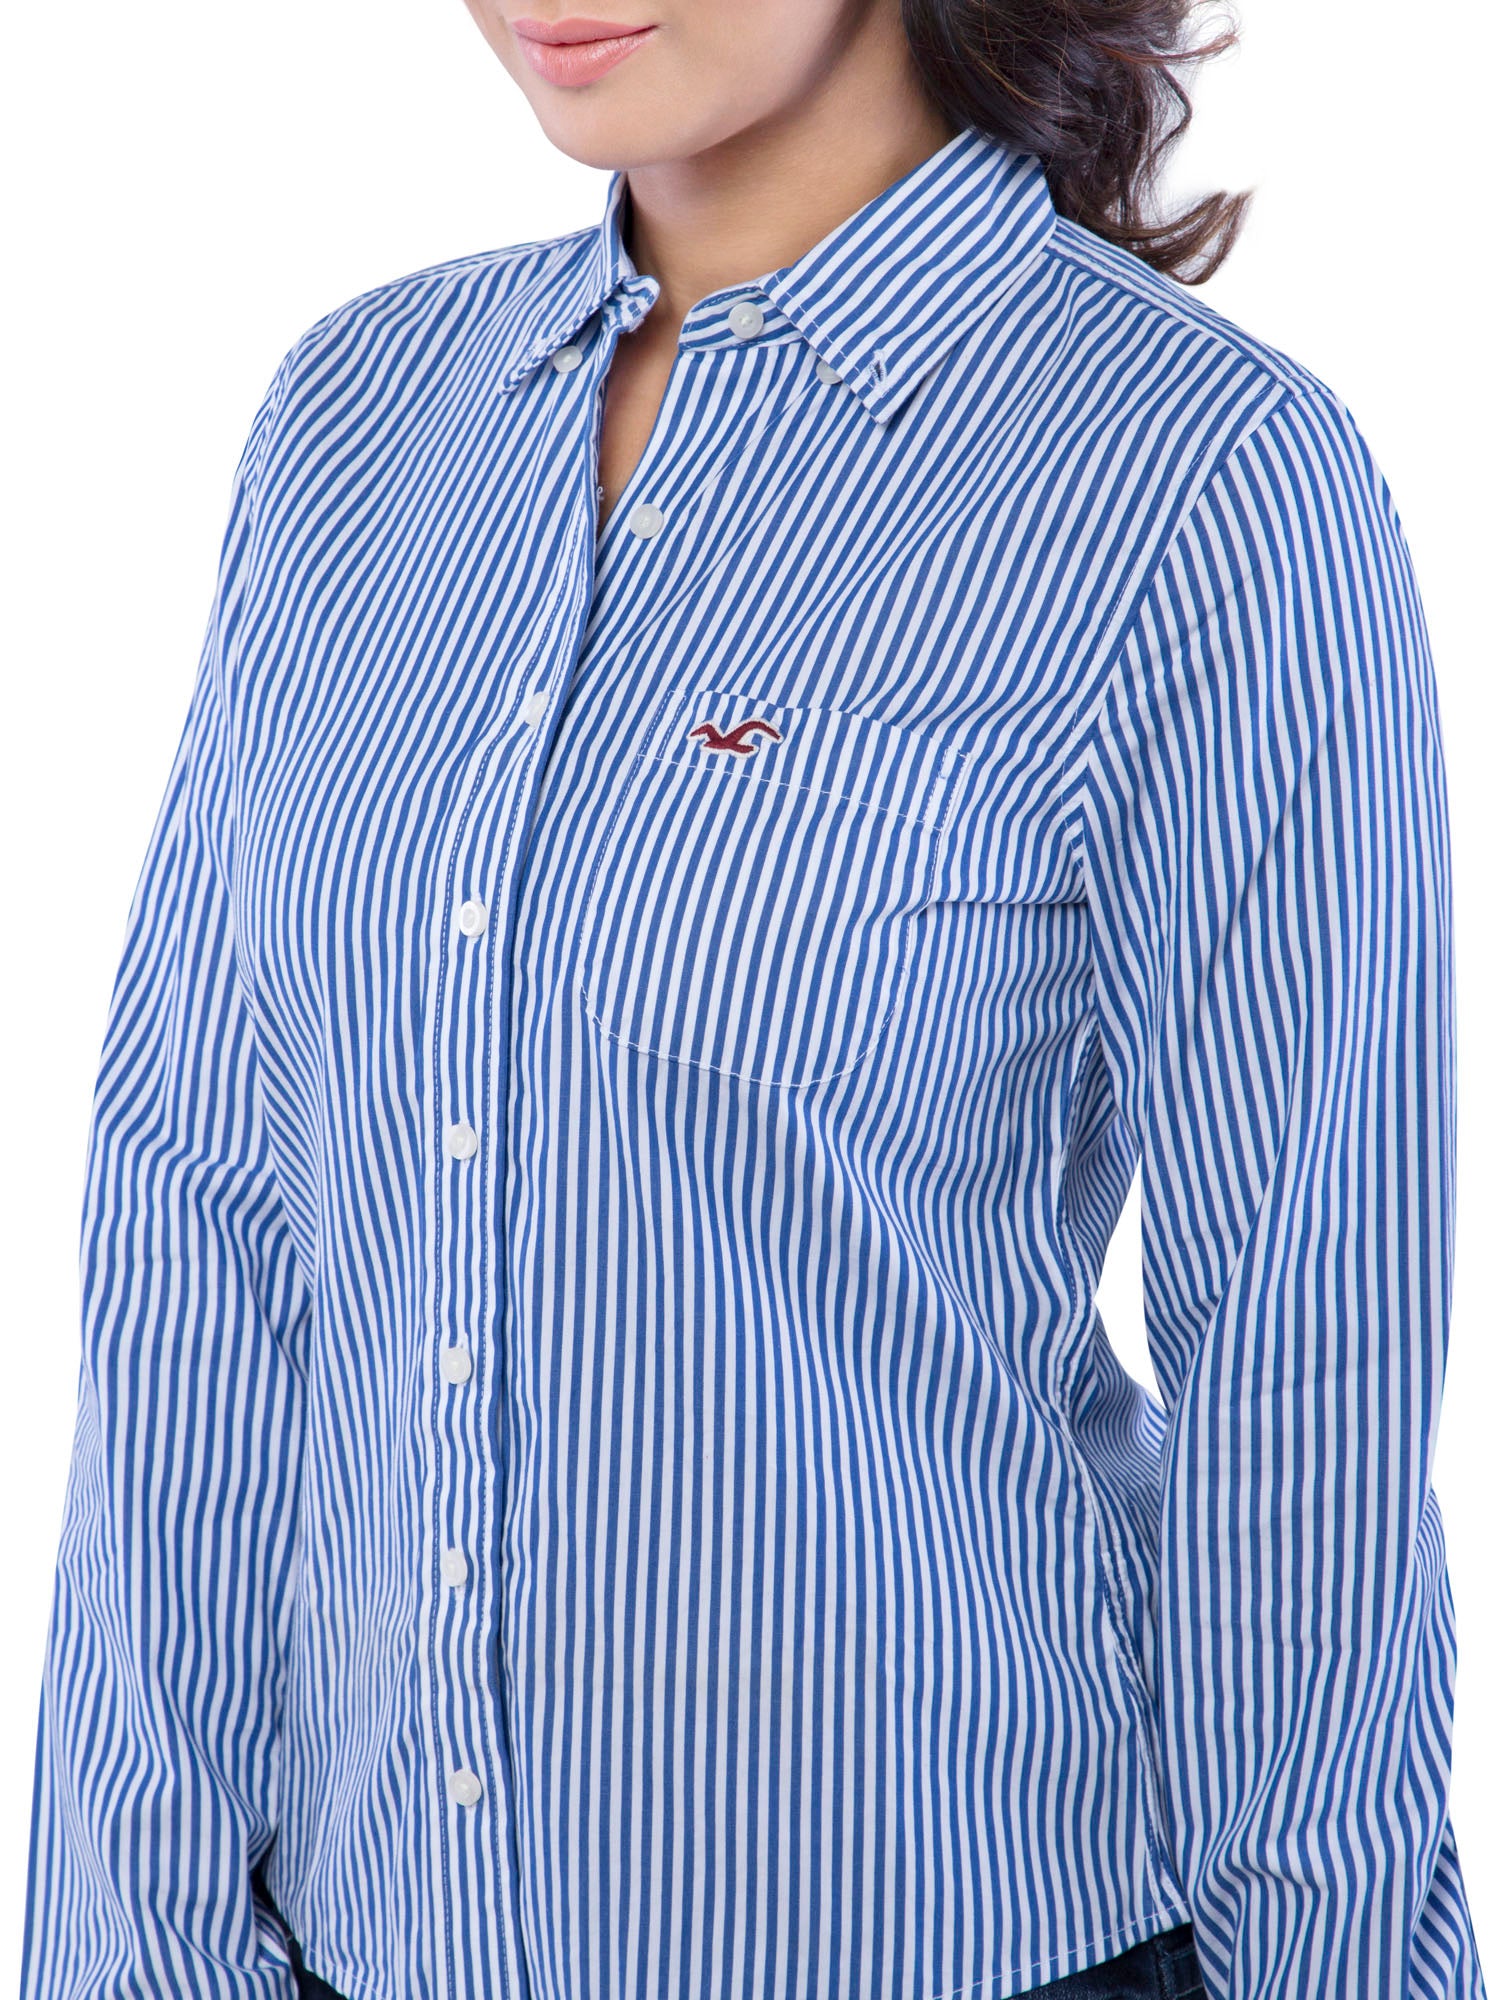 Hollister striped button half down shirt in blue